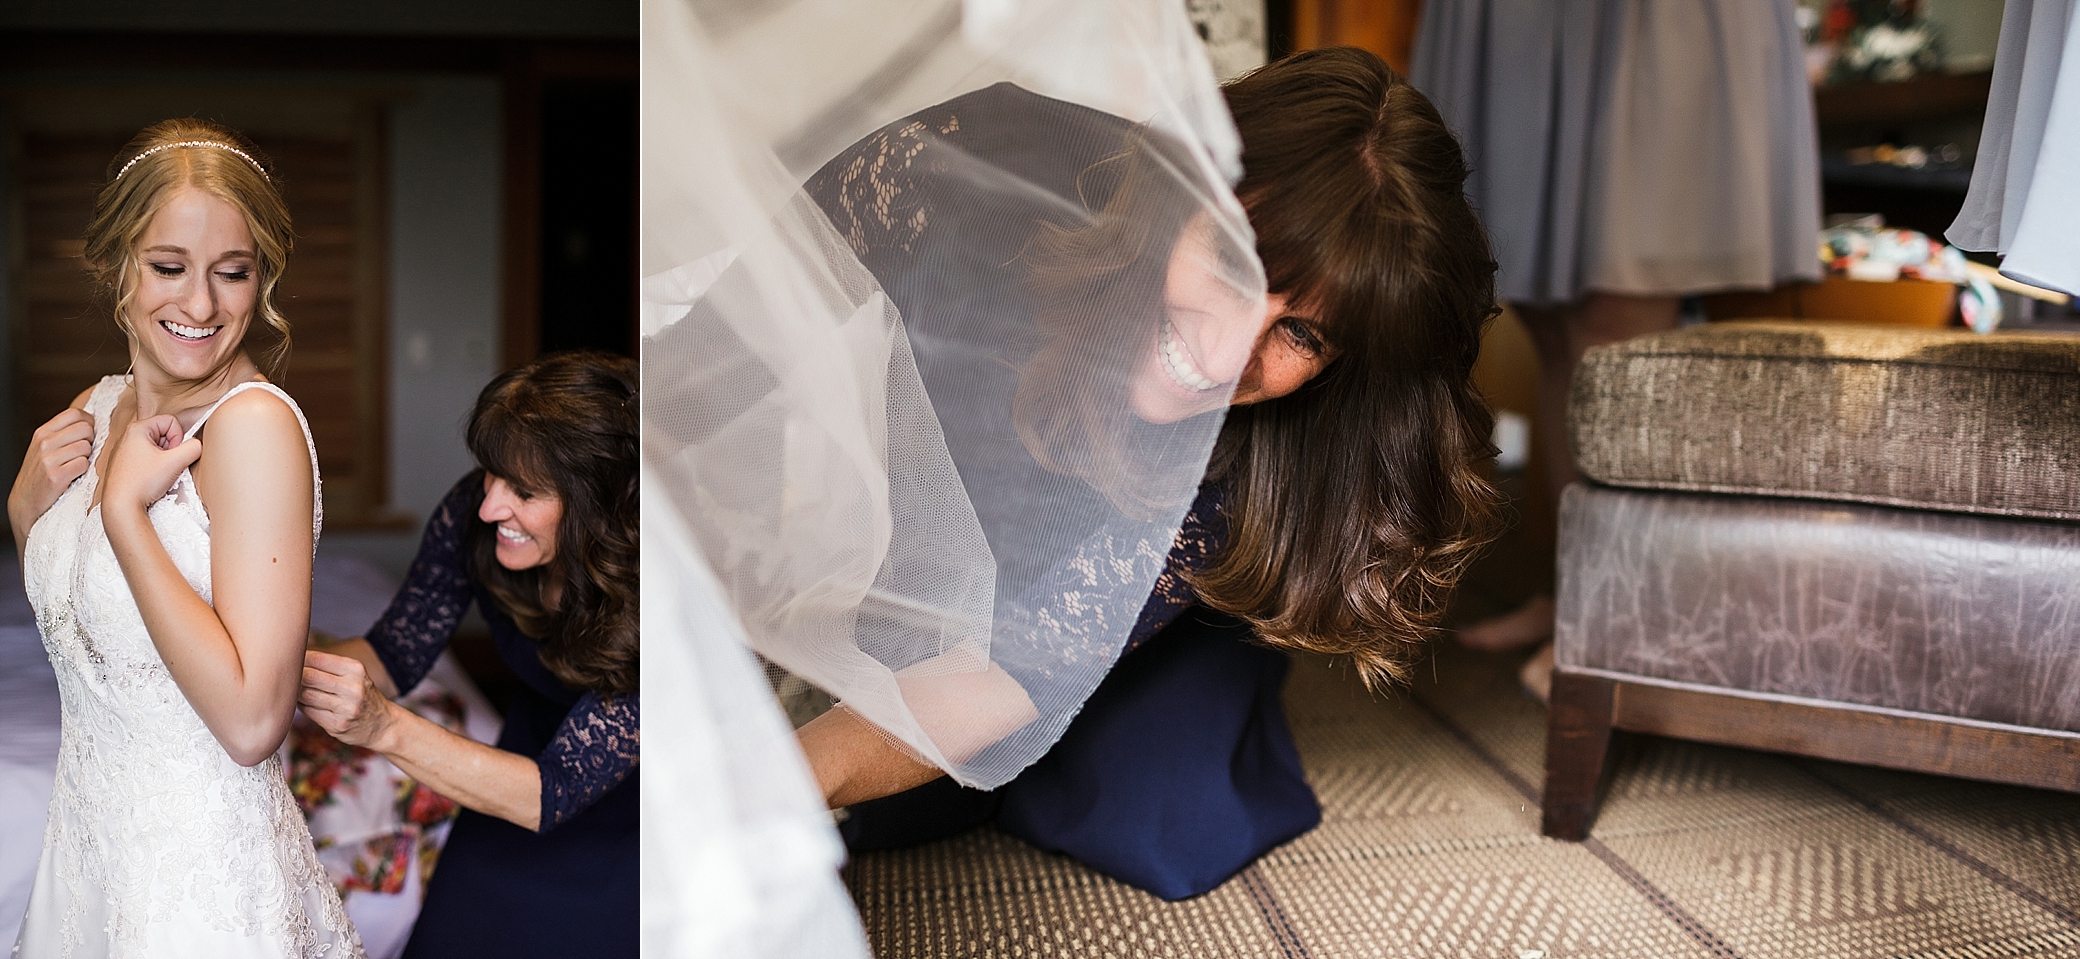 Bride putting on wedding dress | Woodinville Wedding Photographer, Megan Montalvo Photography 